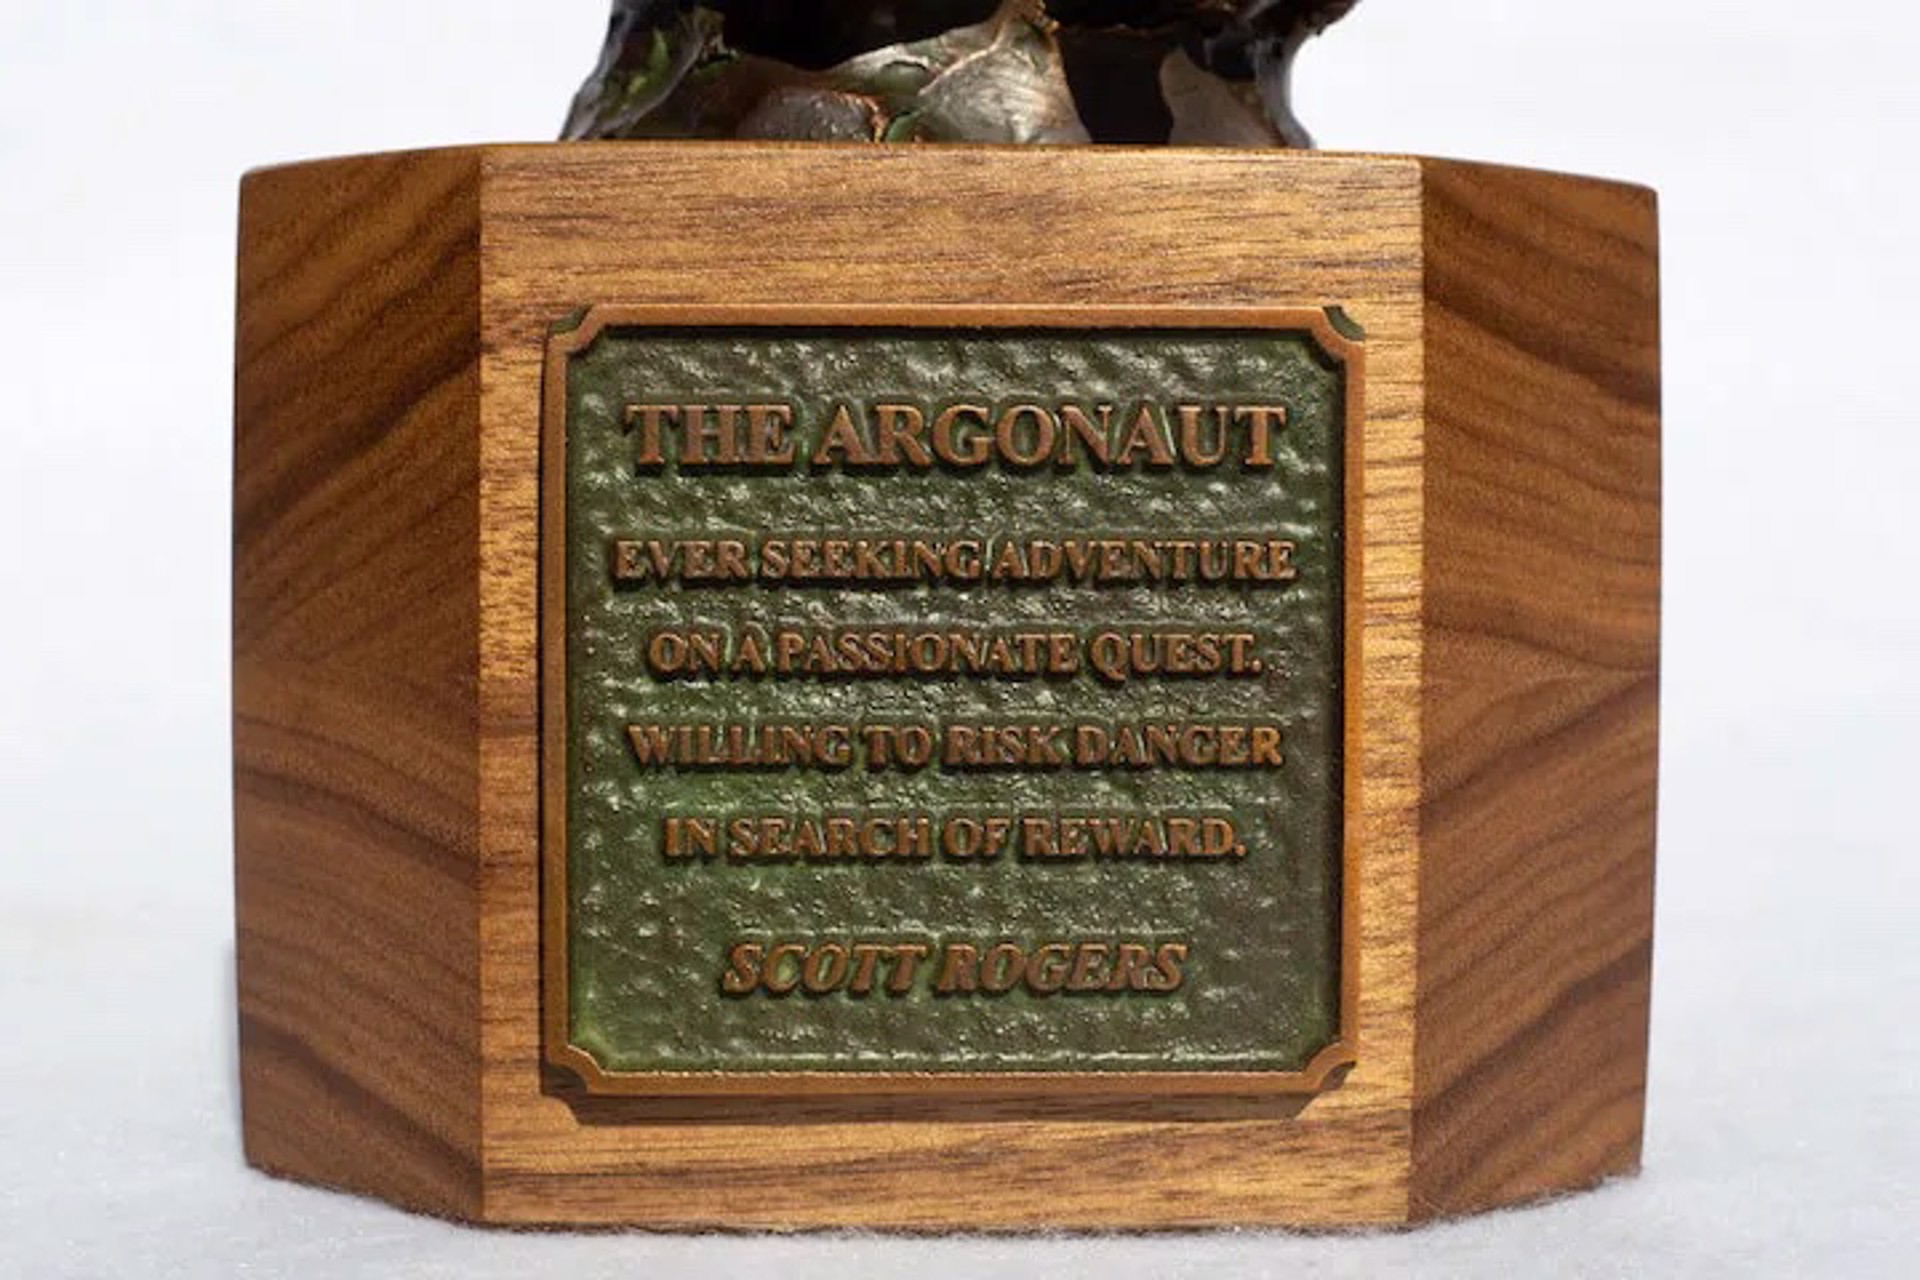 The Argonaut by Scott Rogers